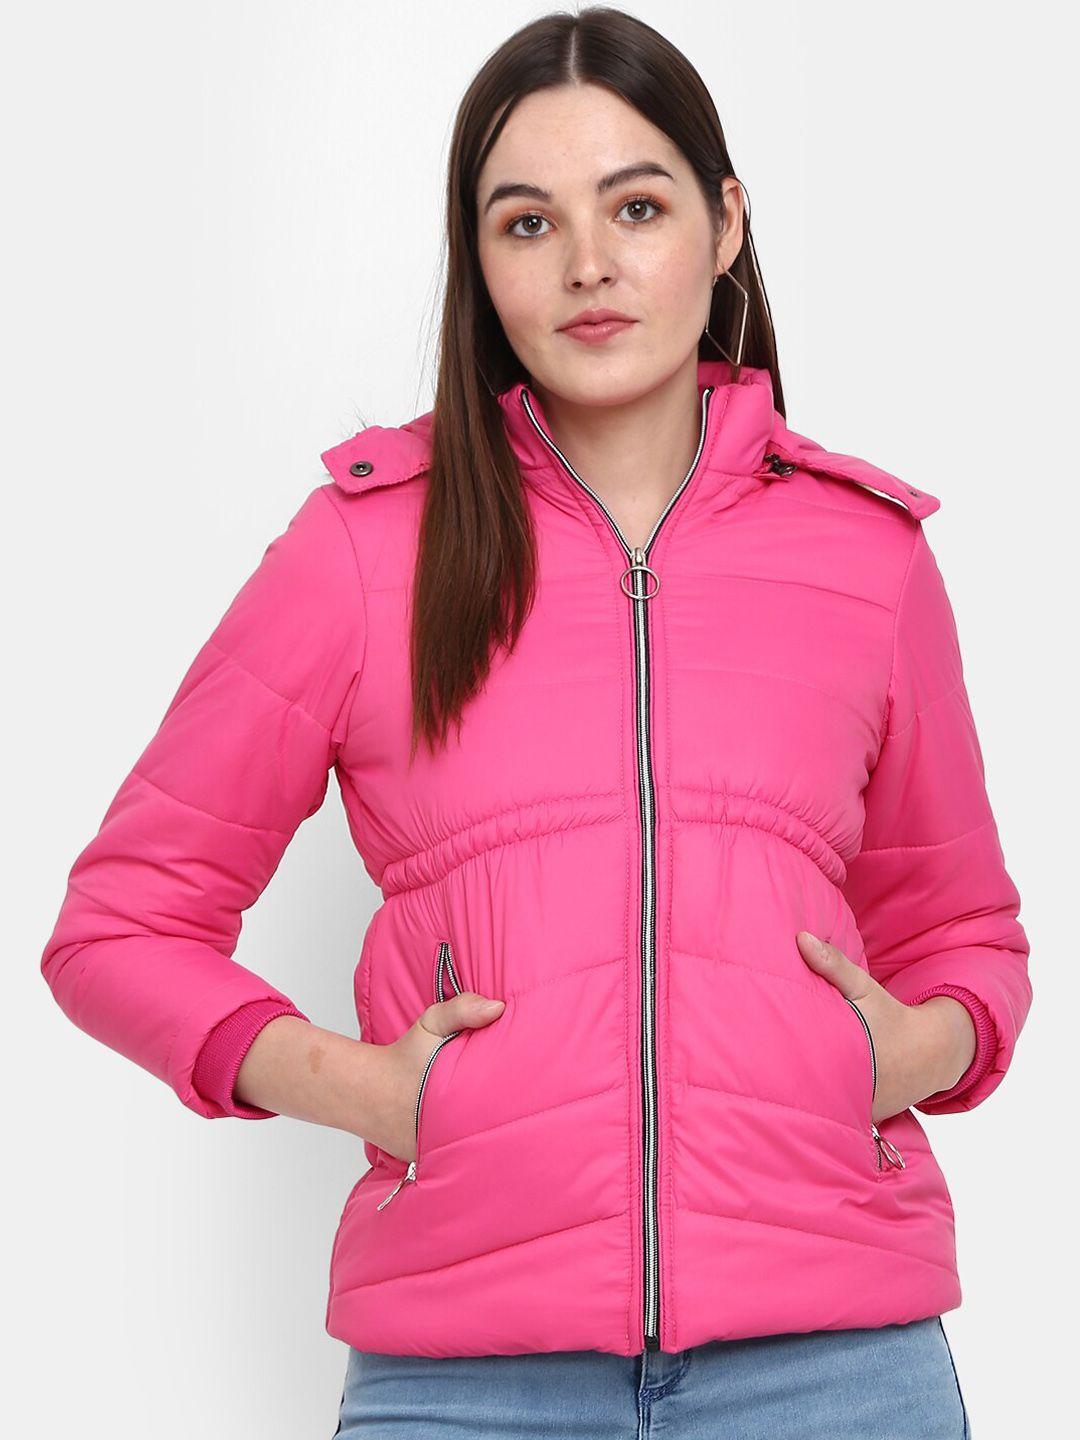 v-mart women hooded training or gym puffer jacket